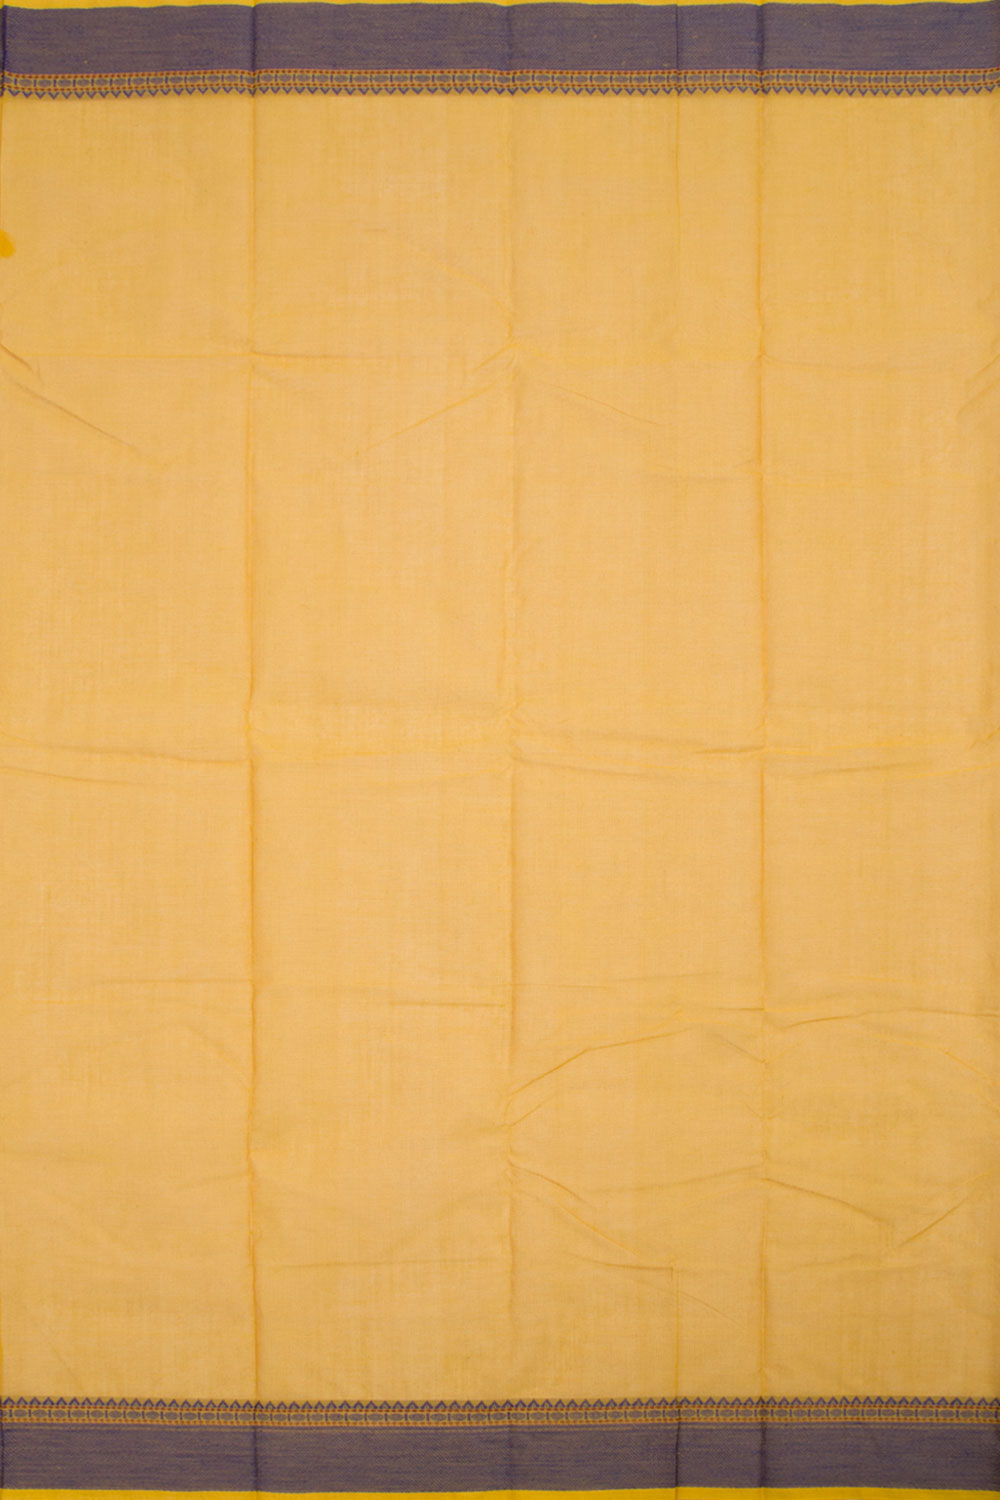 Mustard Yellow Handloom Kanchi Cotton Saree 10060882